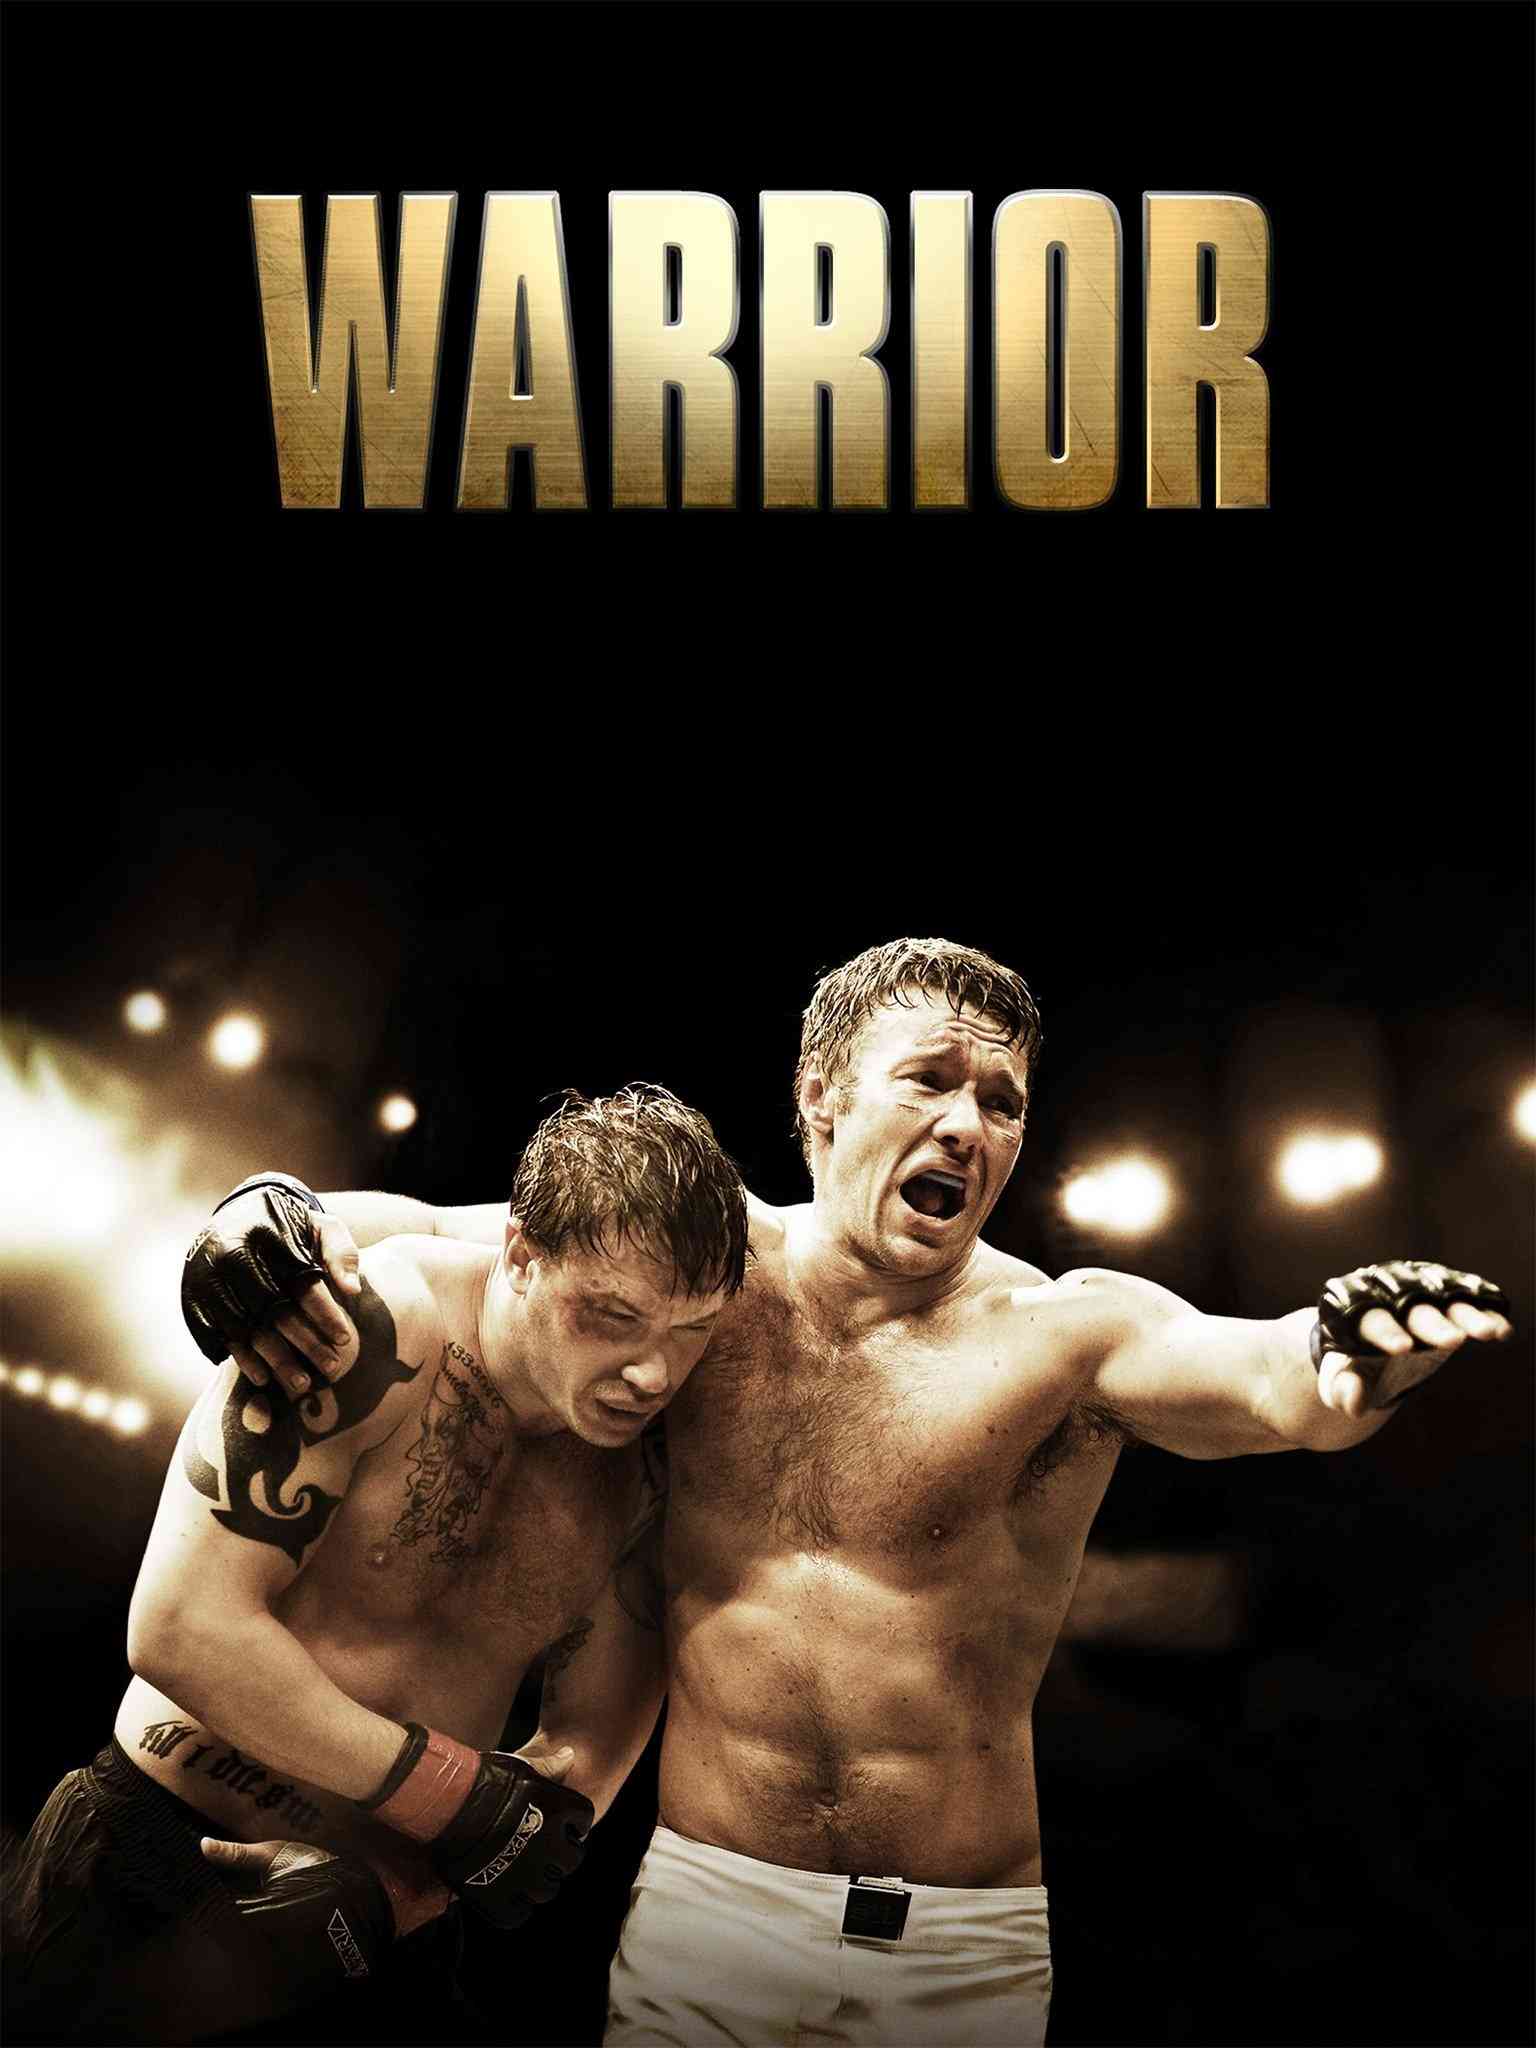 FULL MOVIE: Warrior (2011)